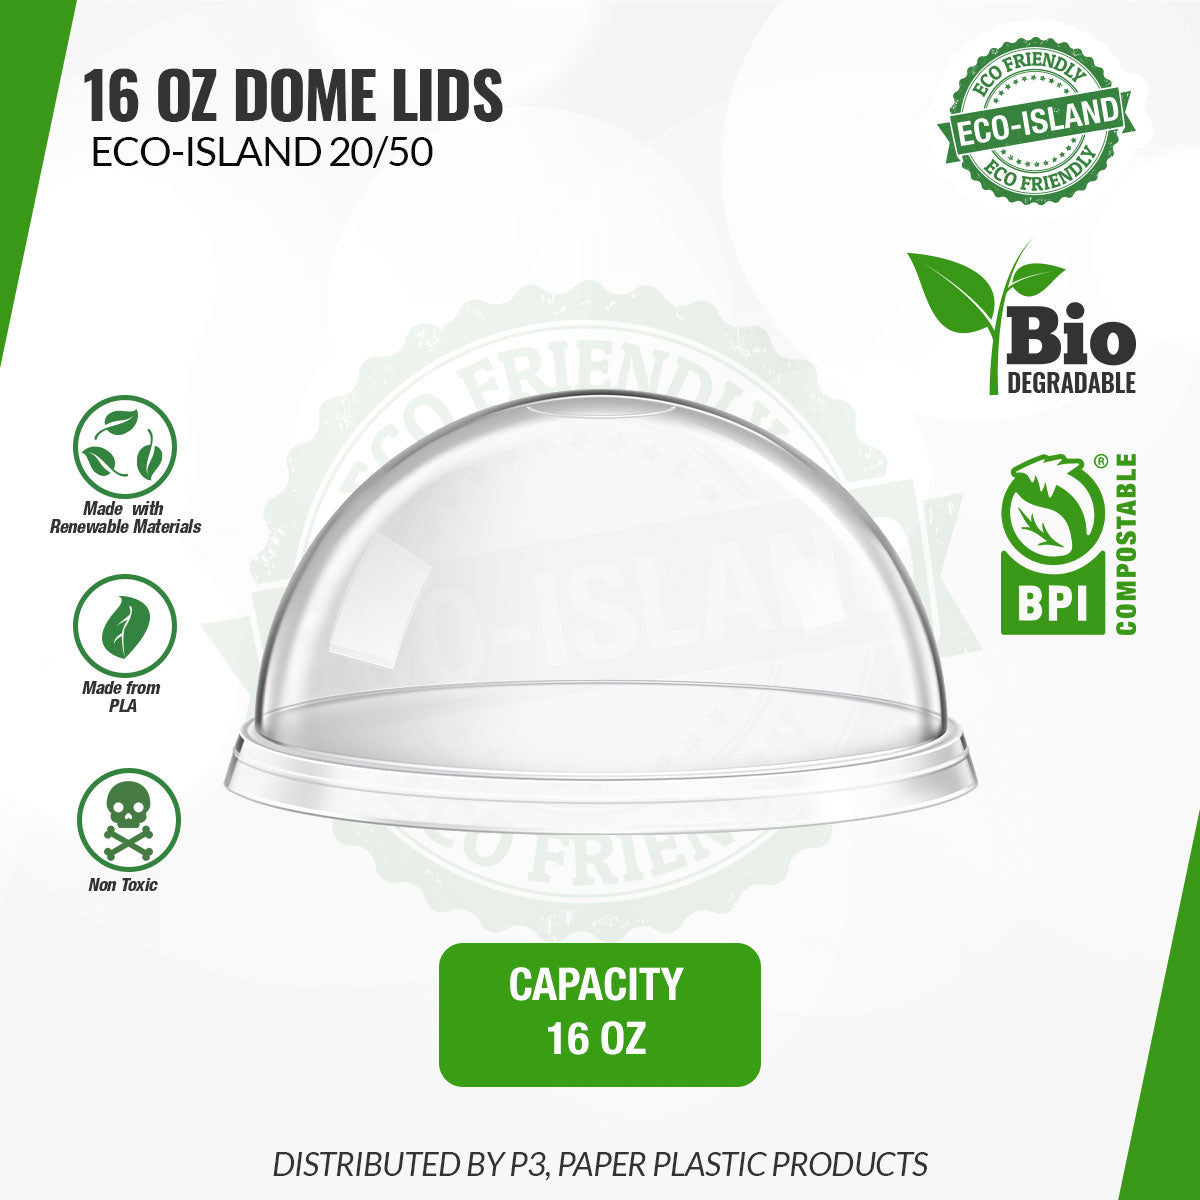 16oz Eco-Island Dome Lids 20/50